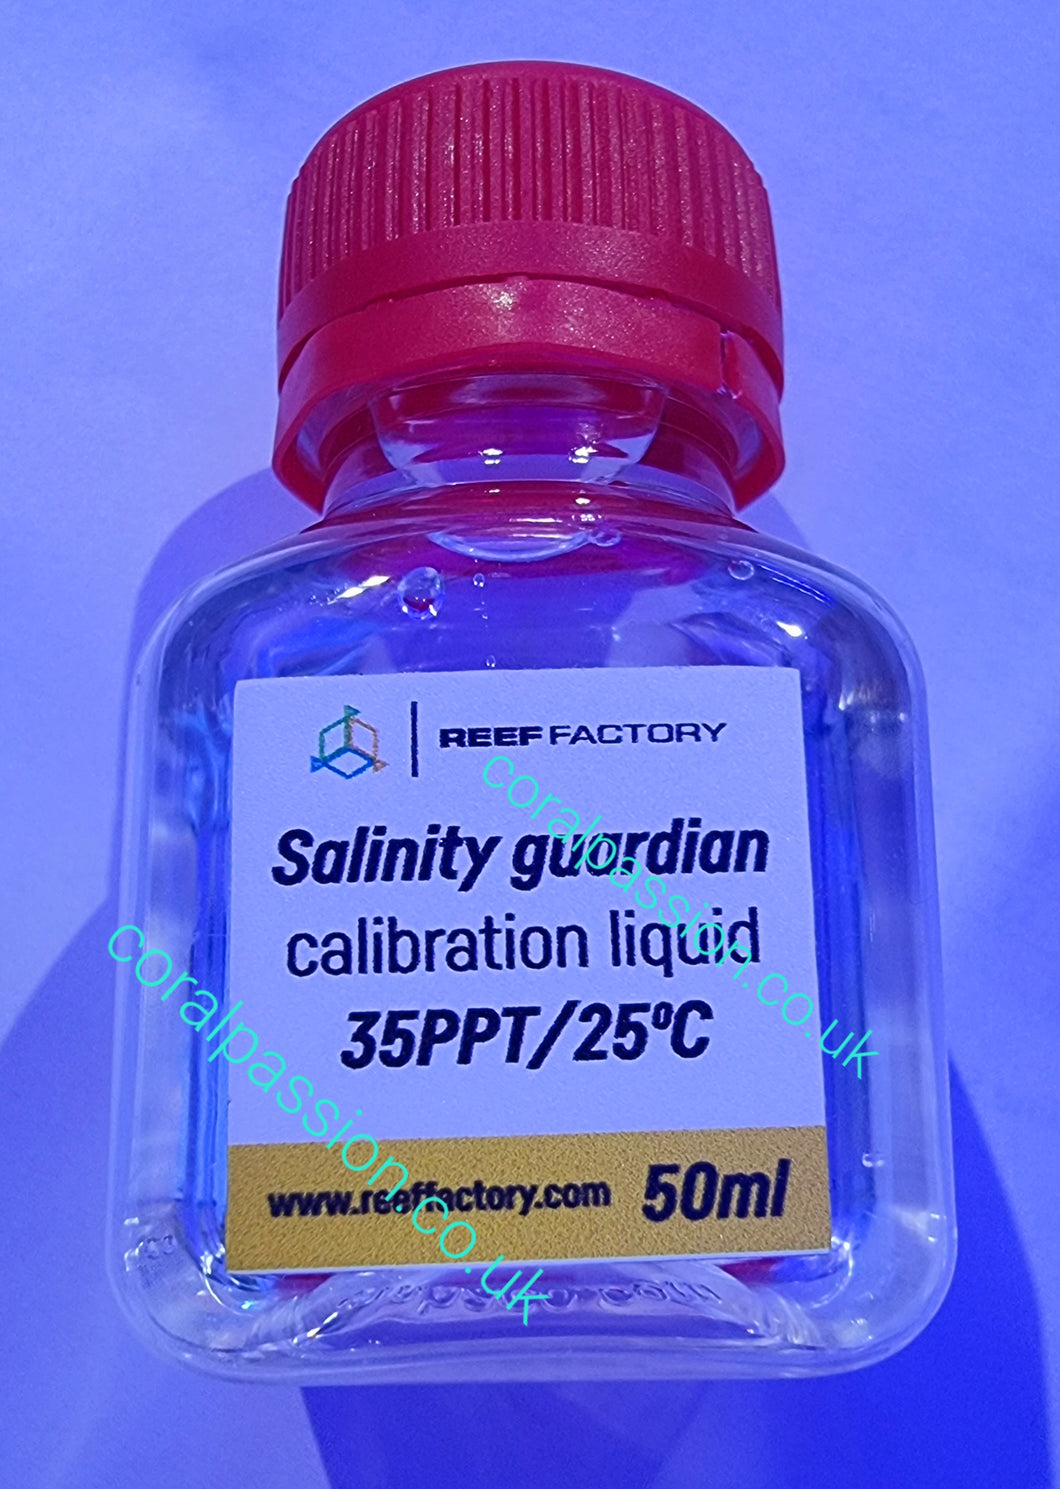 Salinity guardian calibration liquid